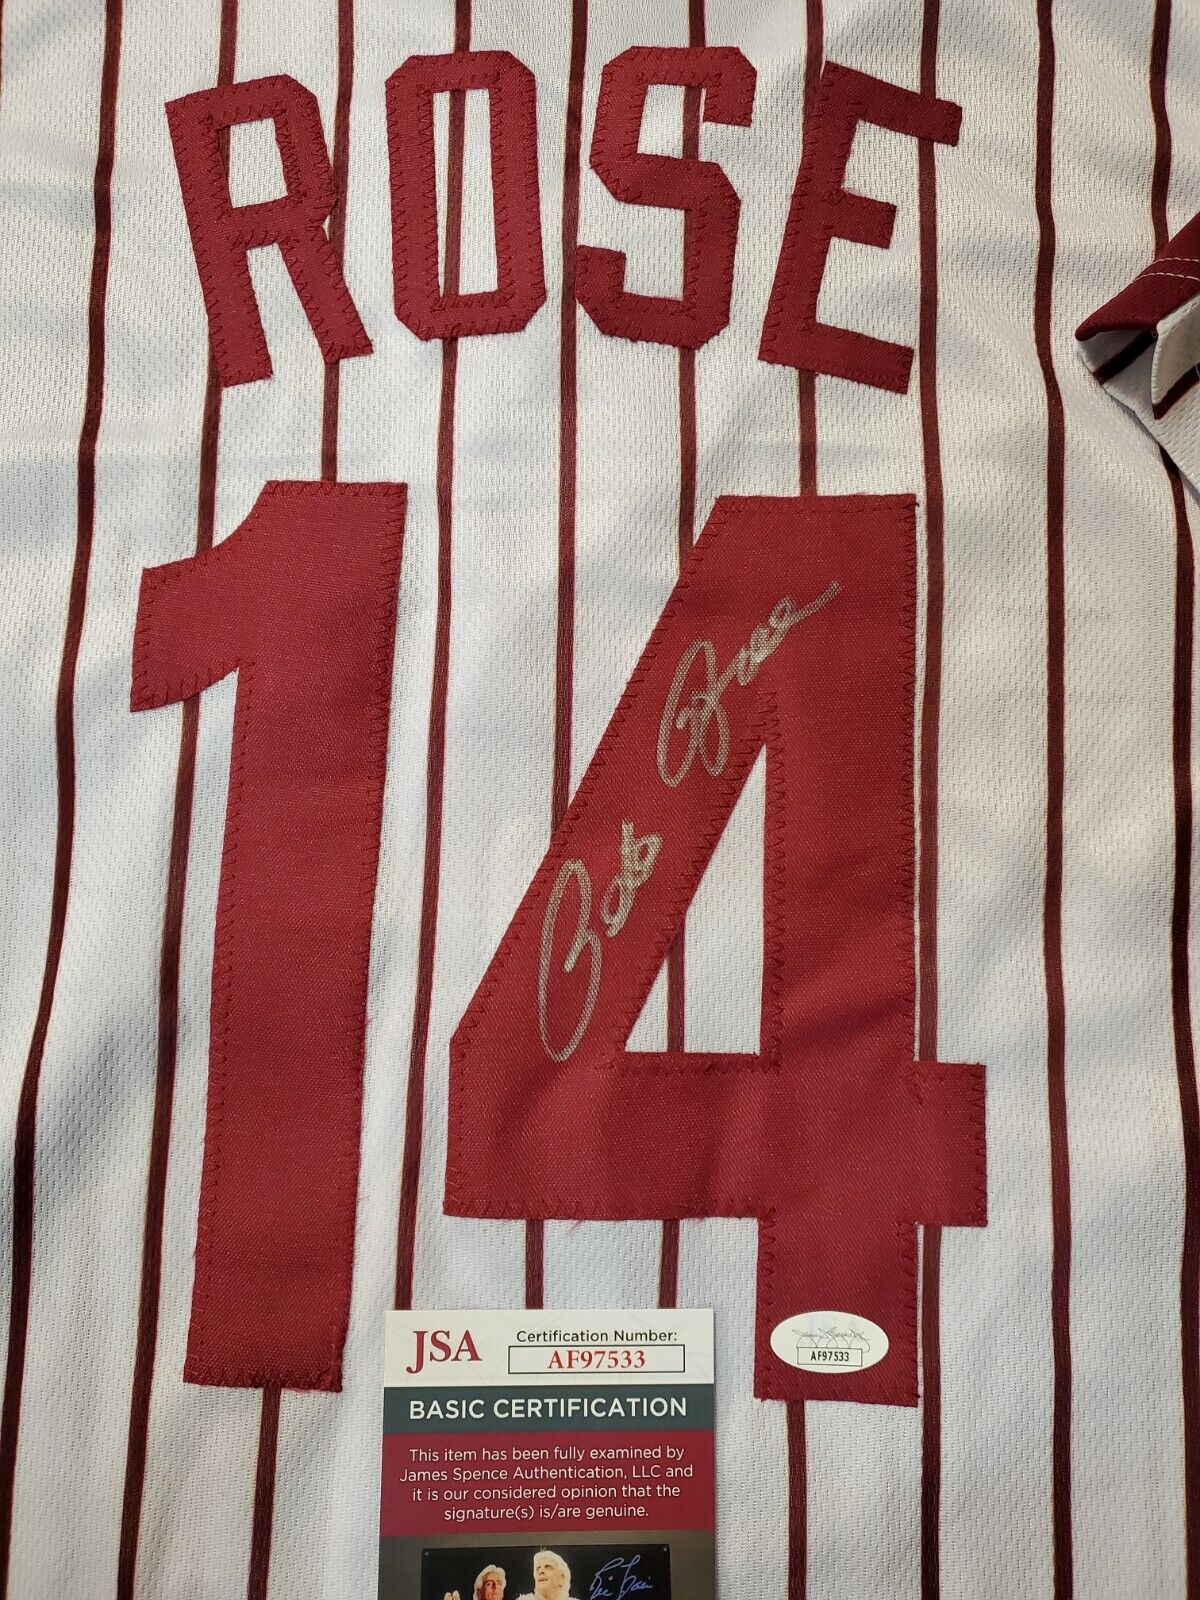 Philadelphia Phillies Pete Rose Autographed Signed Custom Jersey Jsa Coa